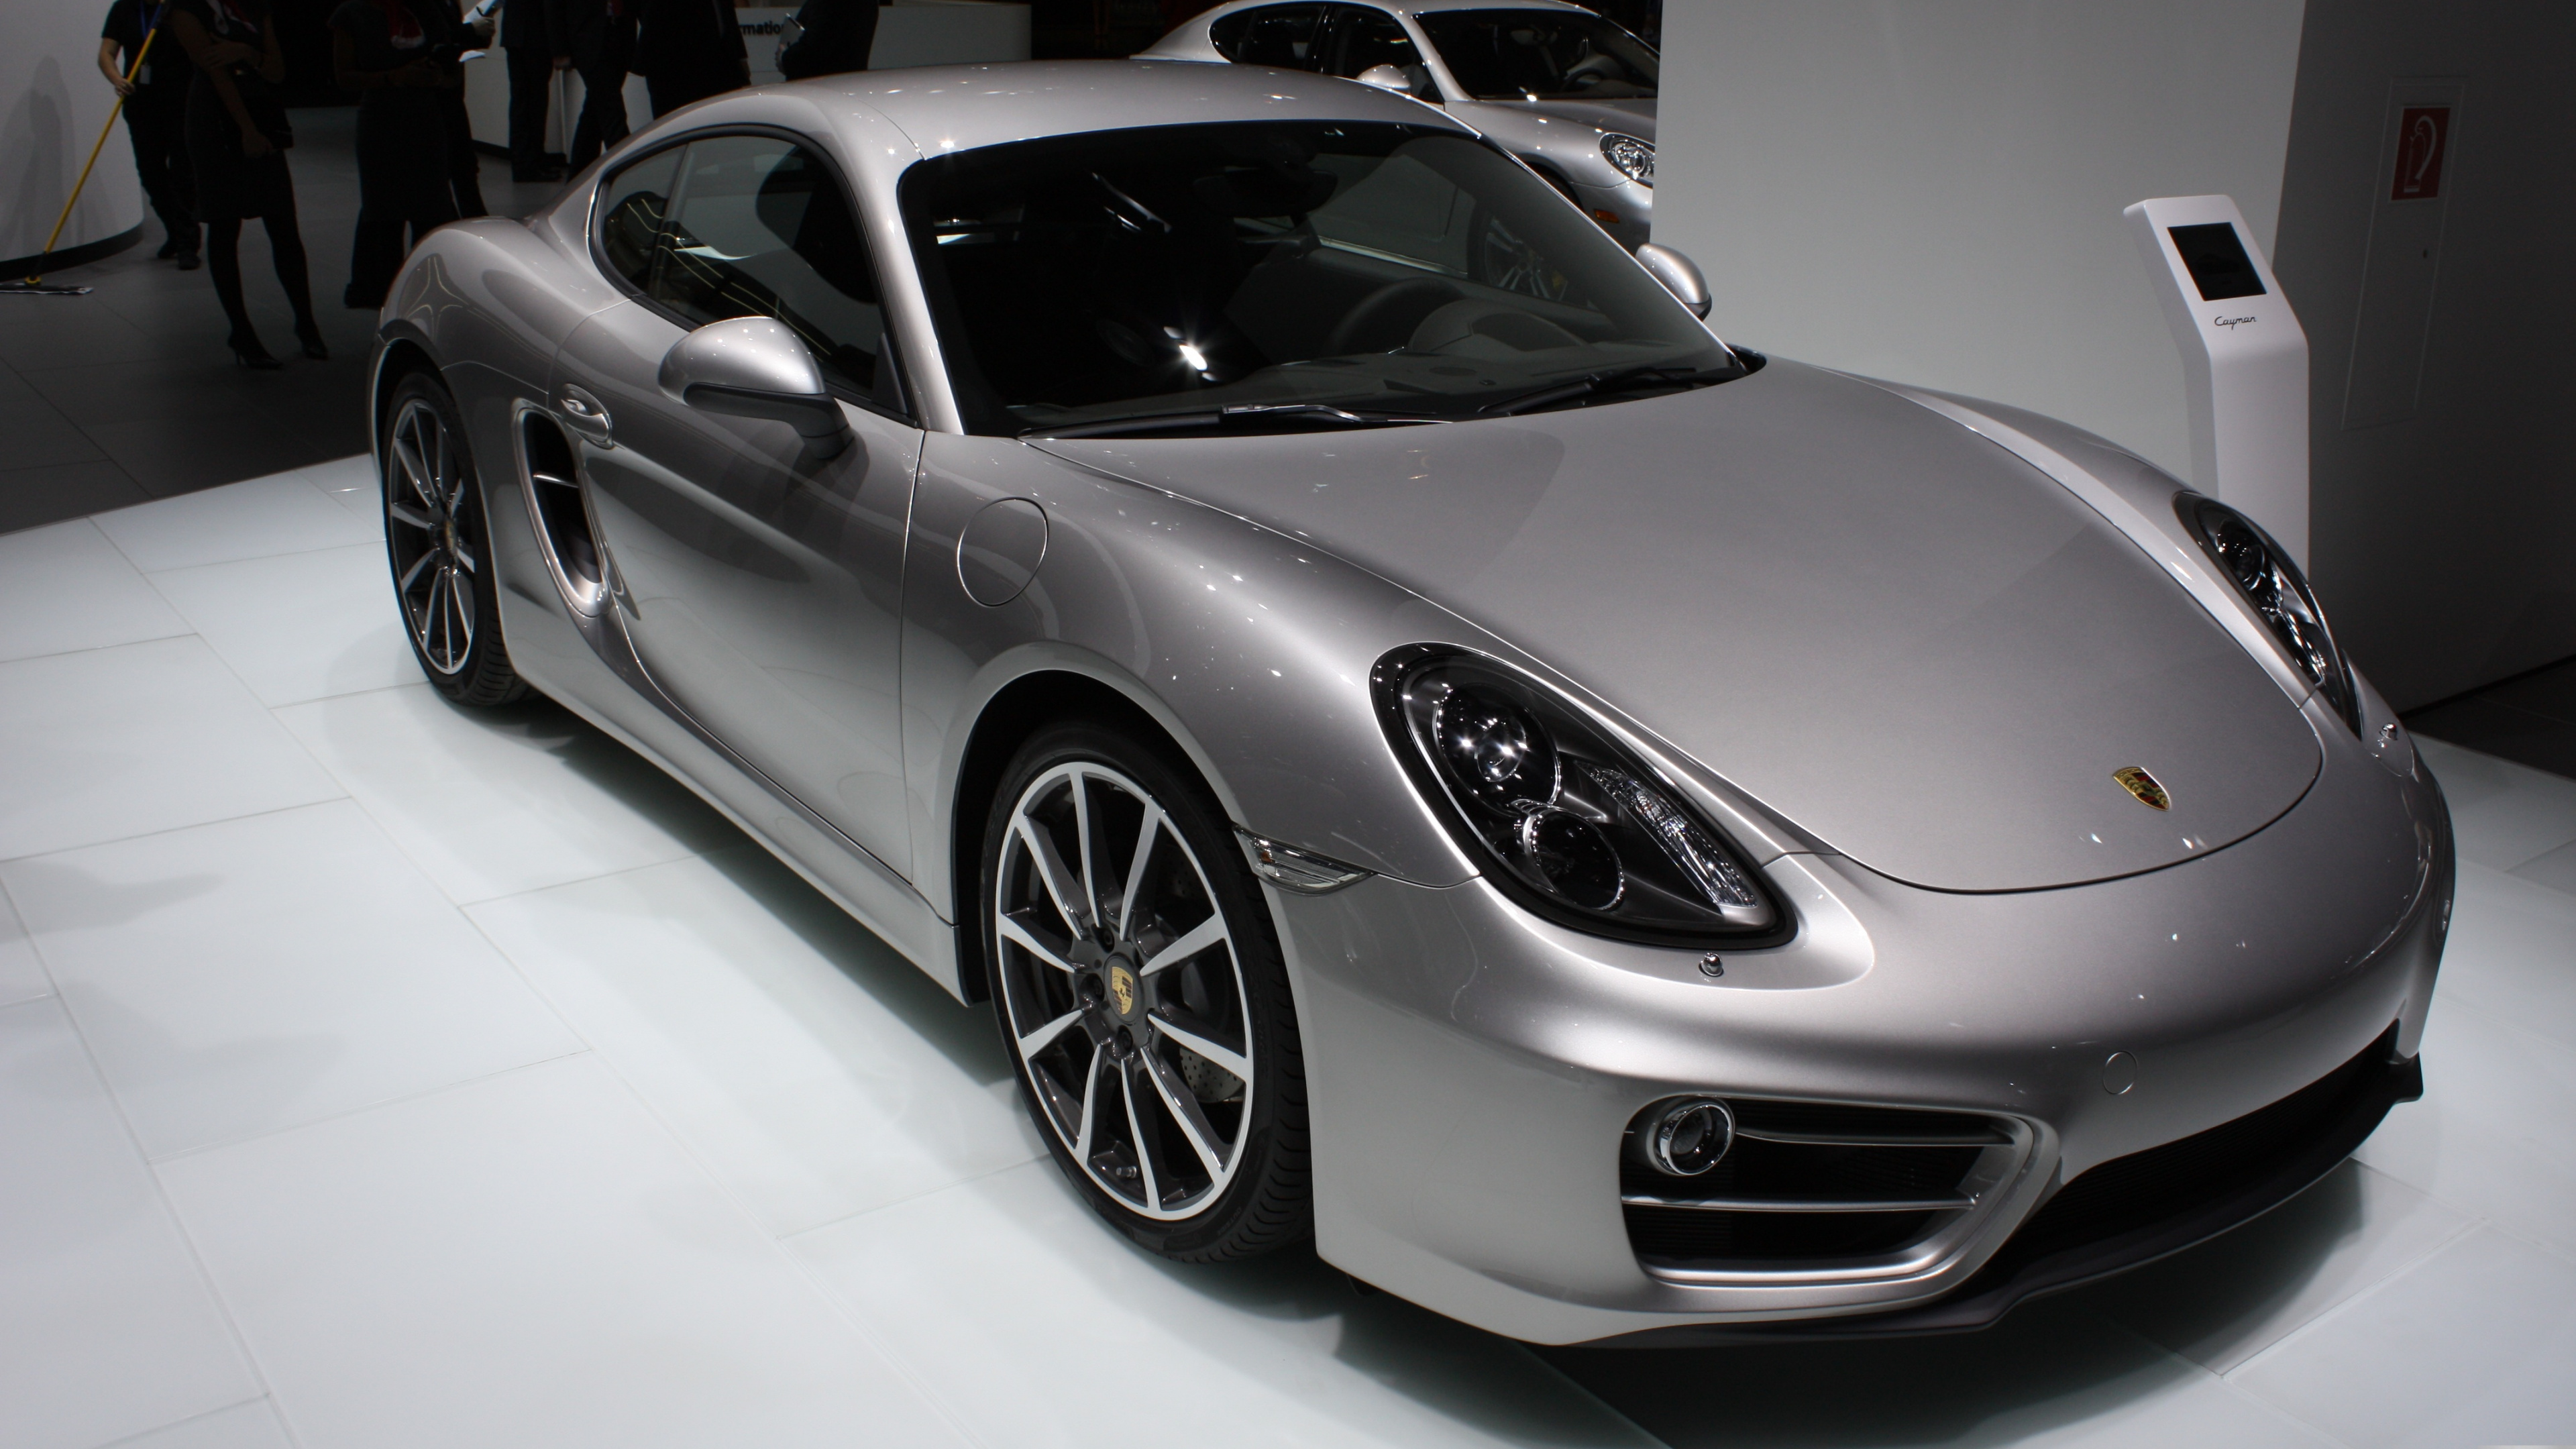 Silver Porsche 911 Parked in a Room. Wallpaper in 3840x2160 Resolution